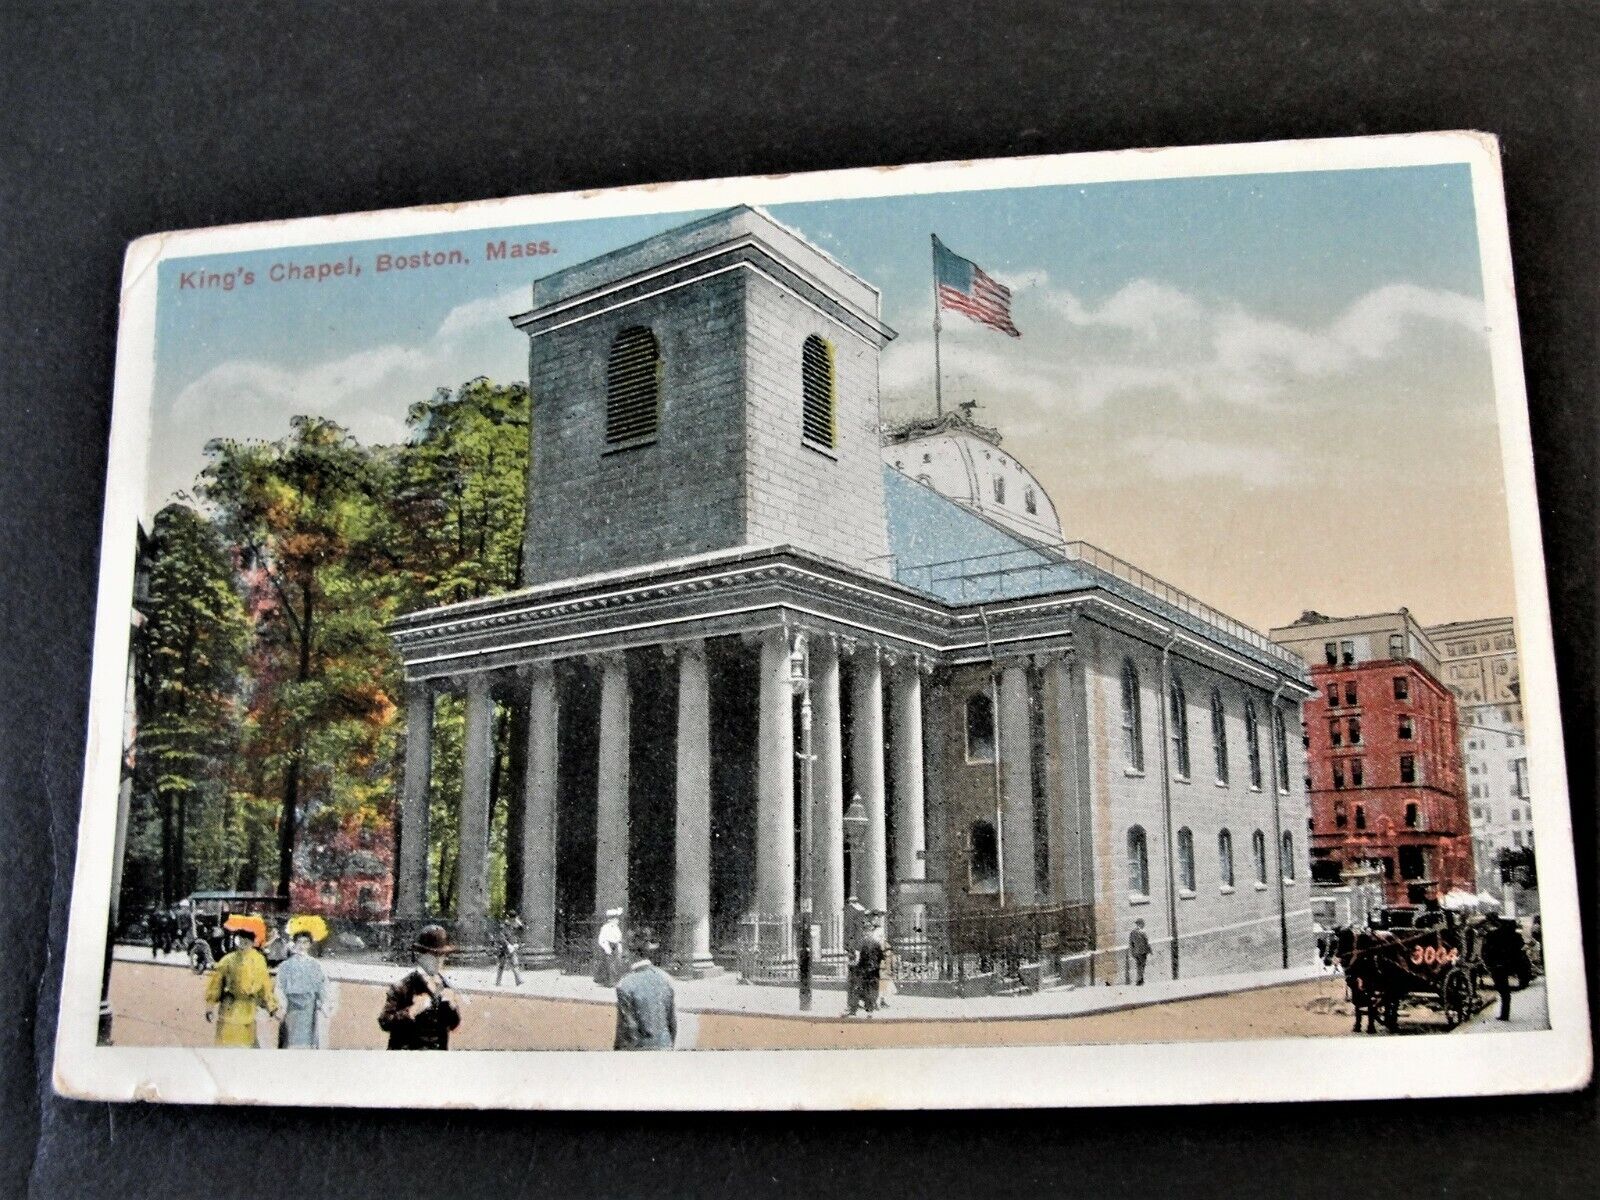 King's Chapel-Boston, Mass.-Green George Washington 1 Cent-1900s Postcard. RARE.